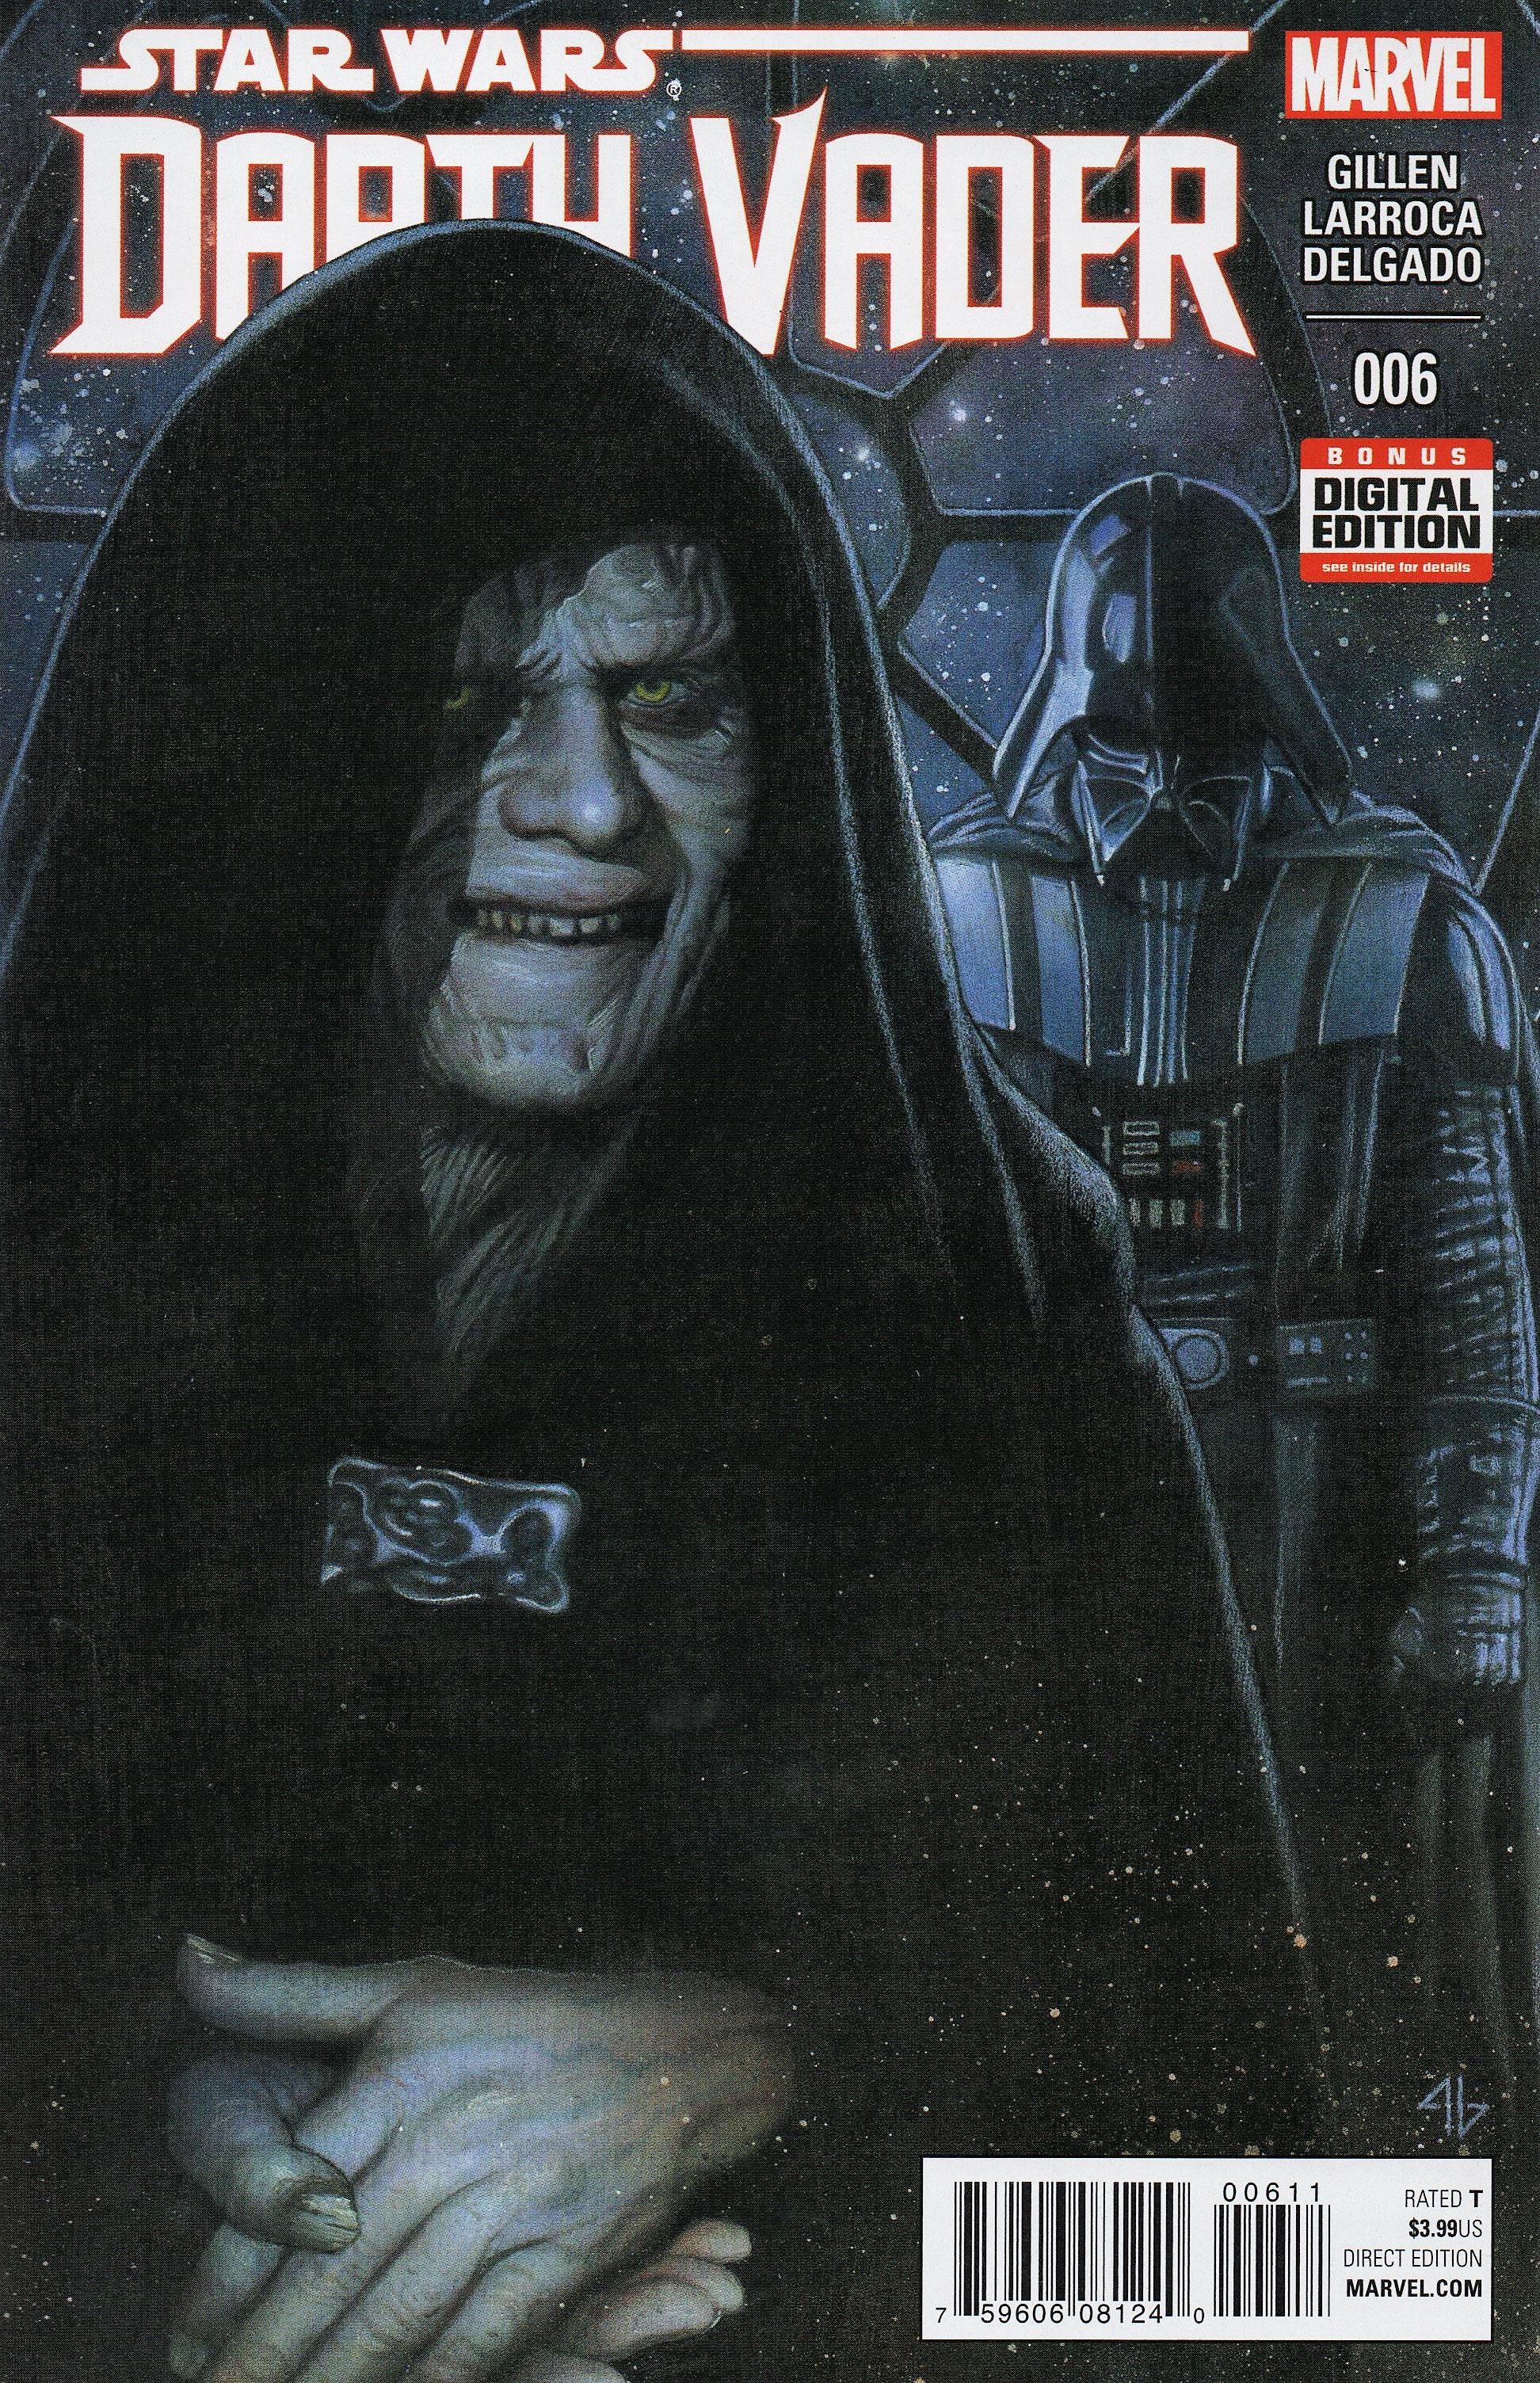 Comic Review: Star Wars: Darth Vader Vol. 1: Vader (Marvel)